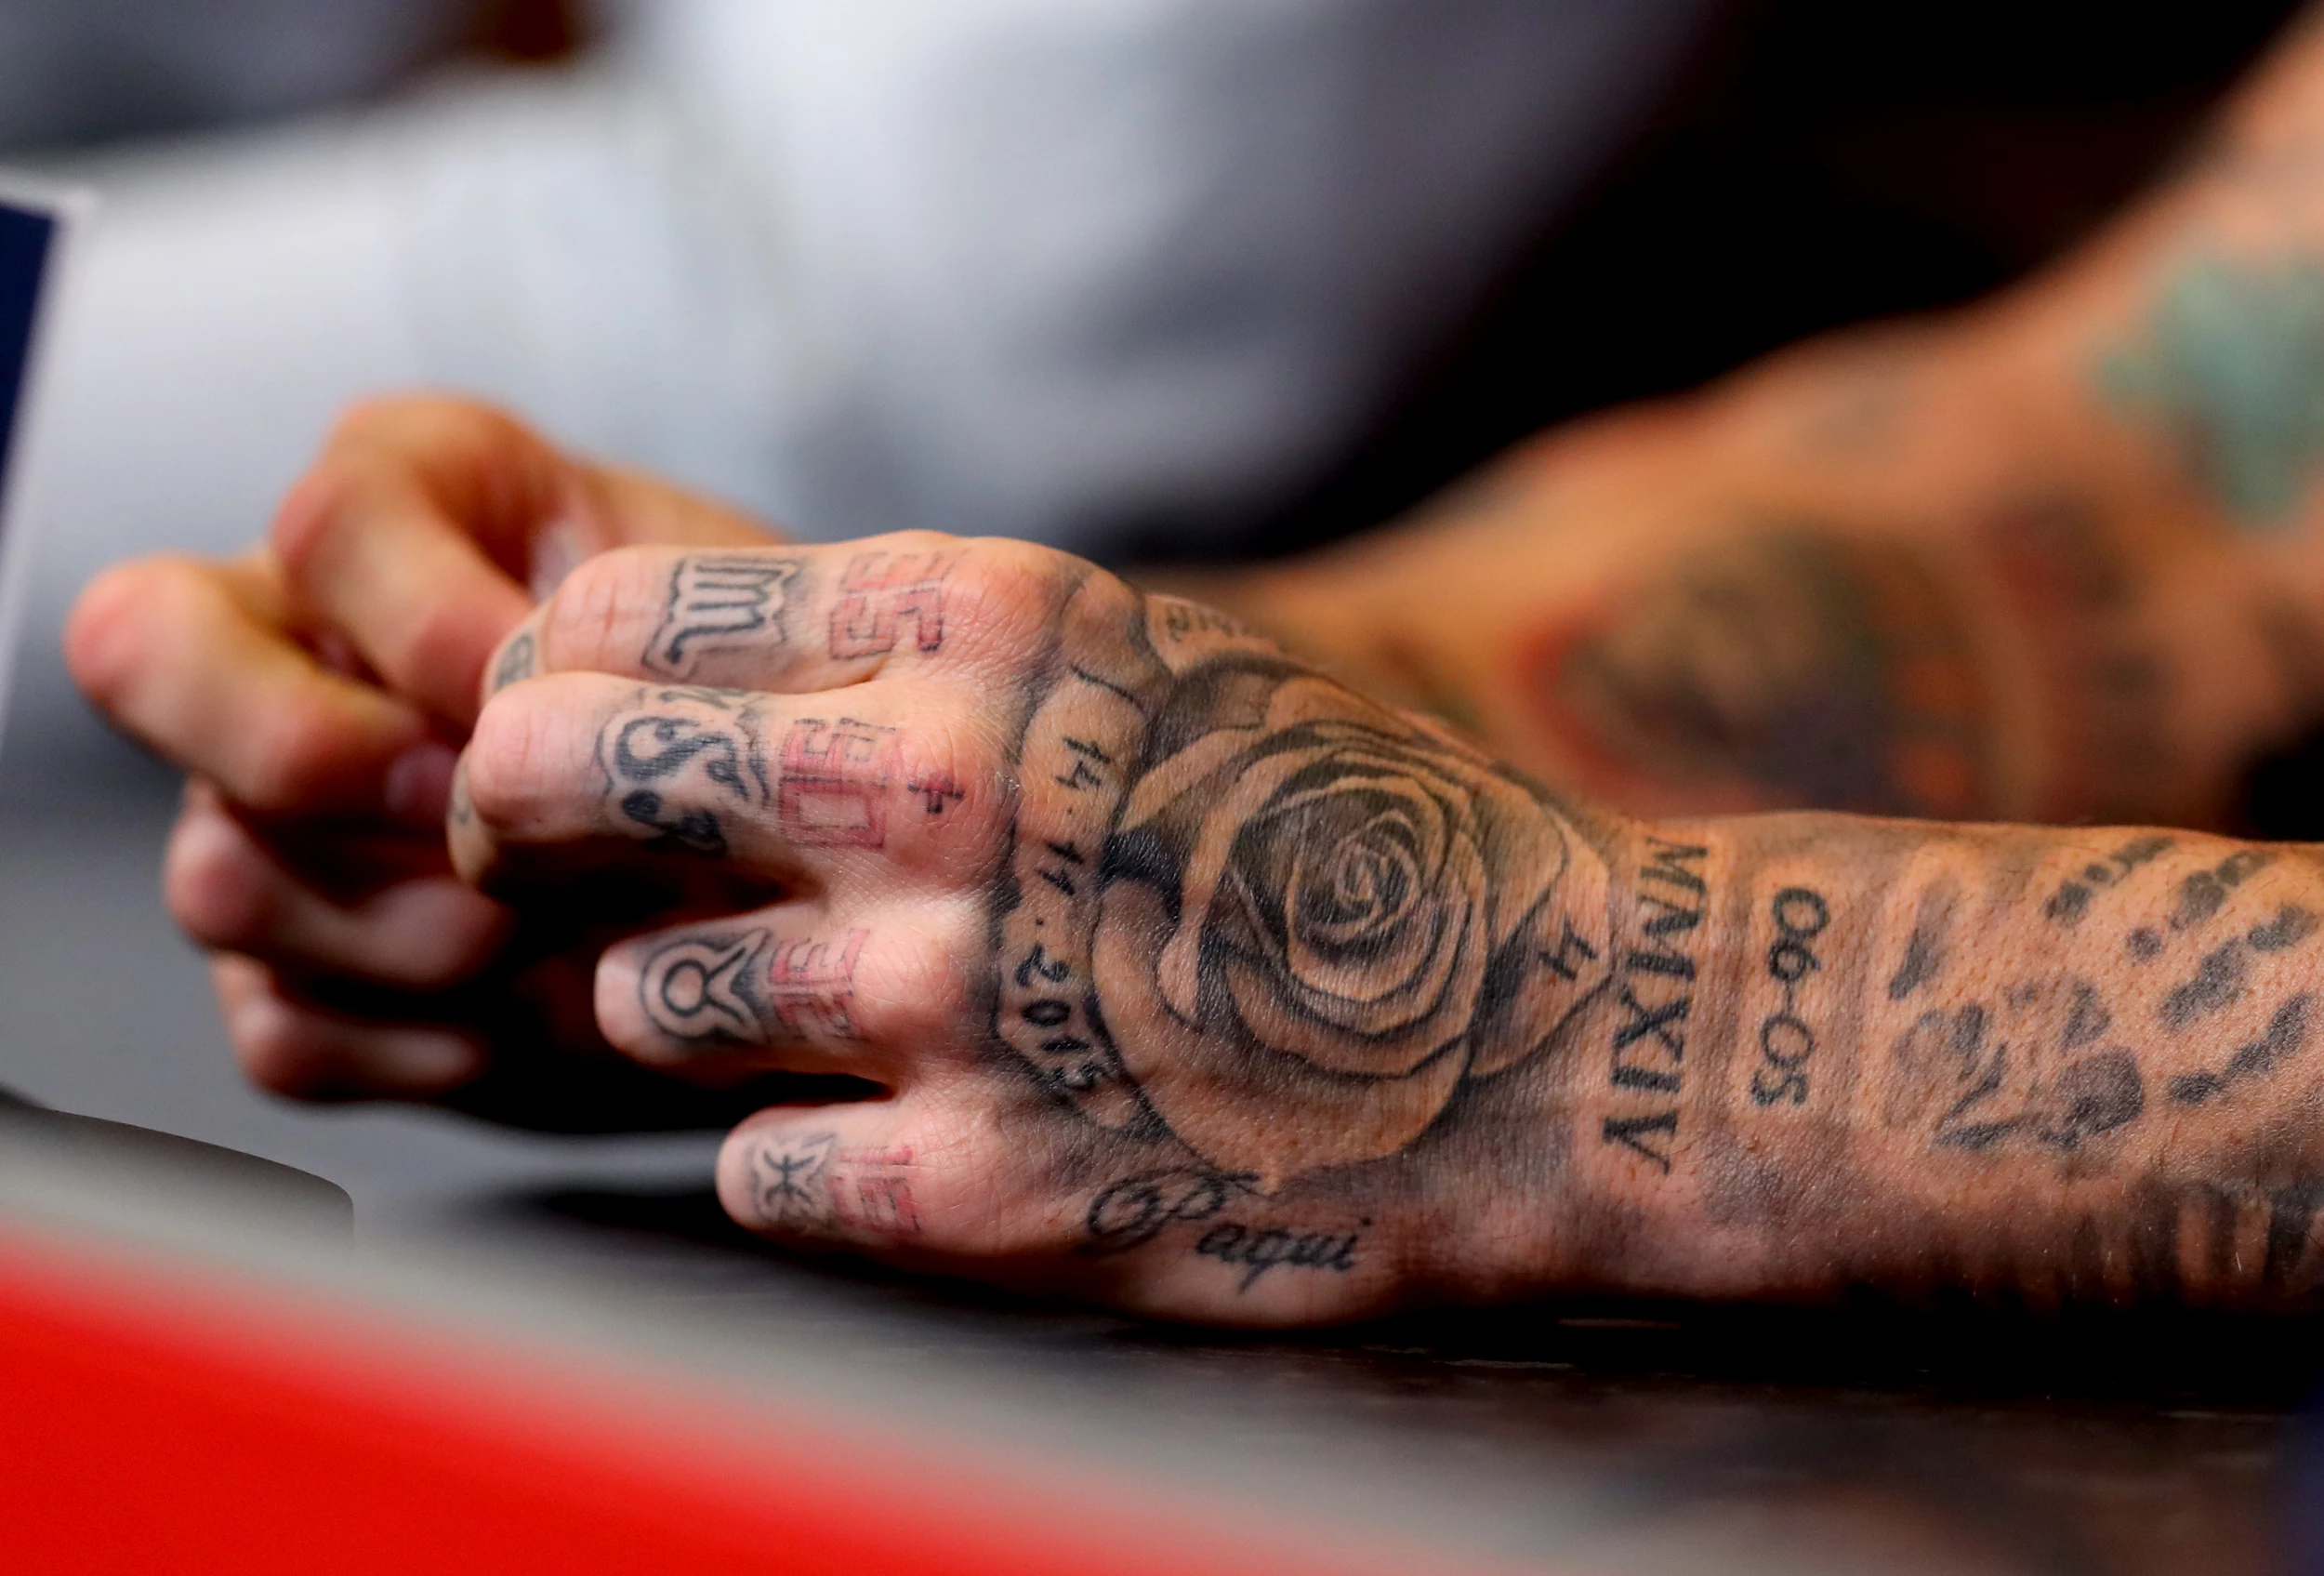 Semicolon tattoos piercings event helps raise funds for suicide survivor  program